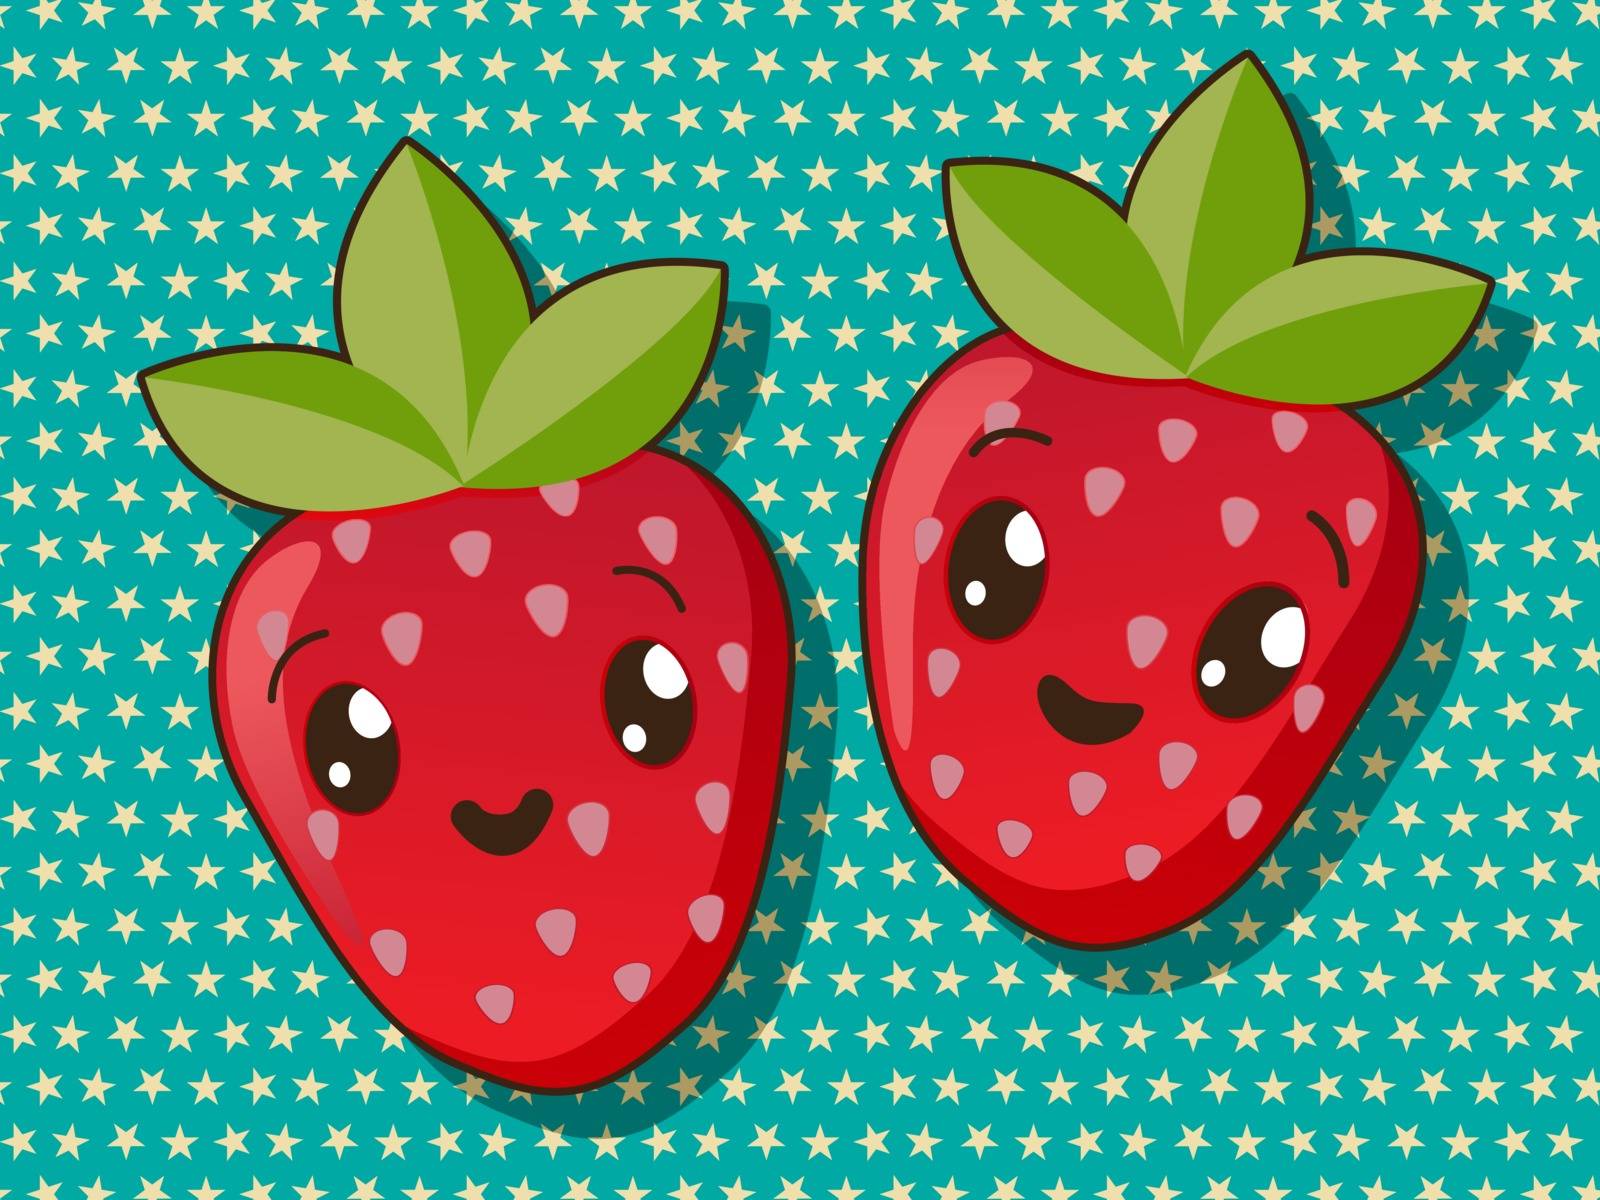 Kawaii style drawing strawberry icons